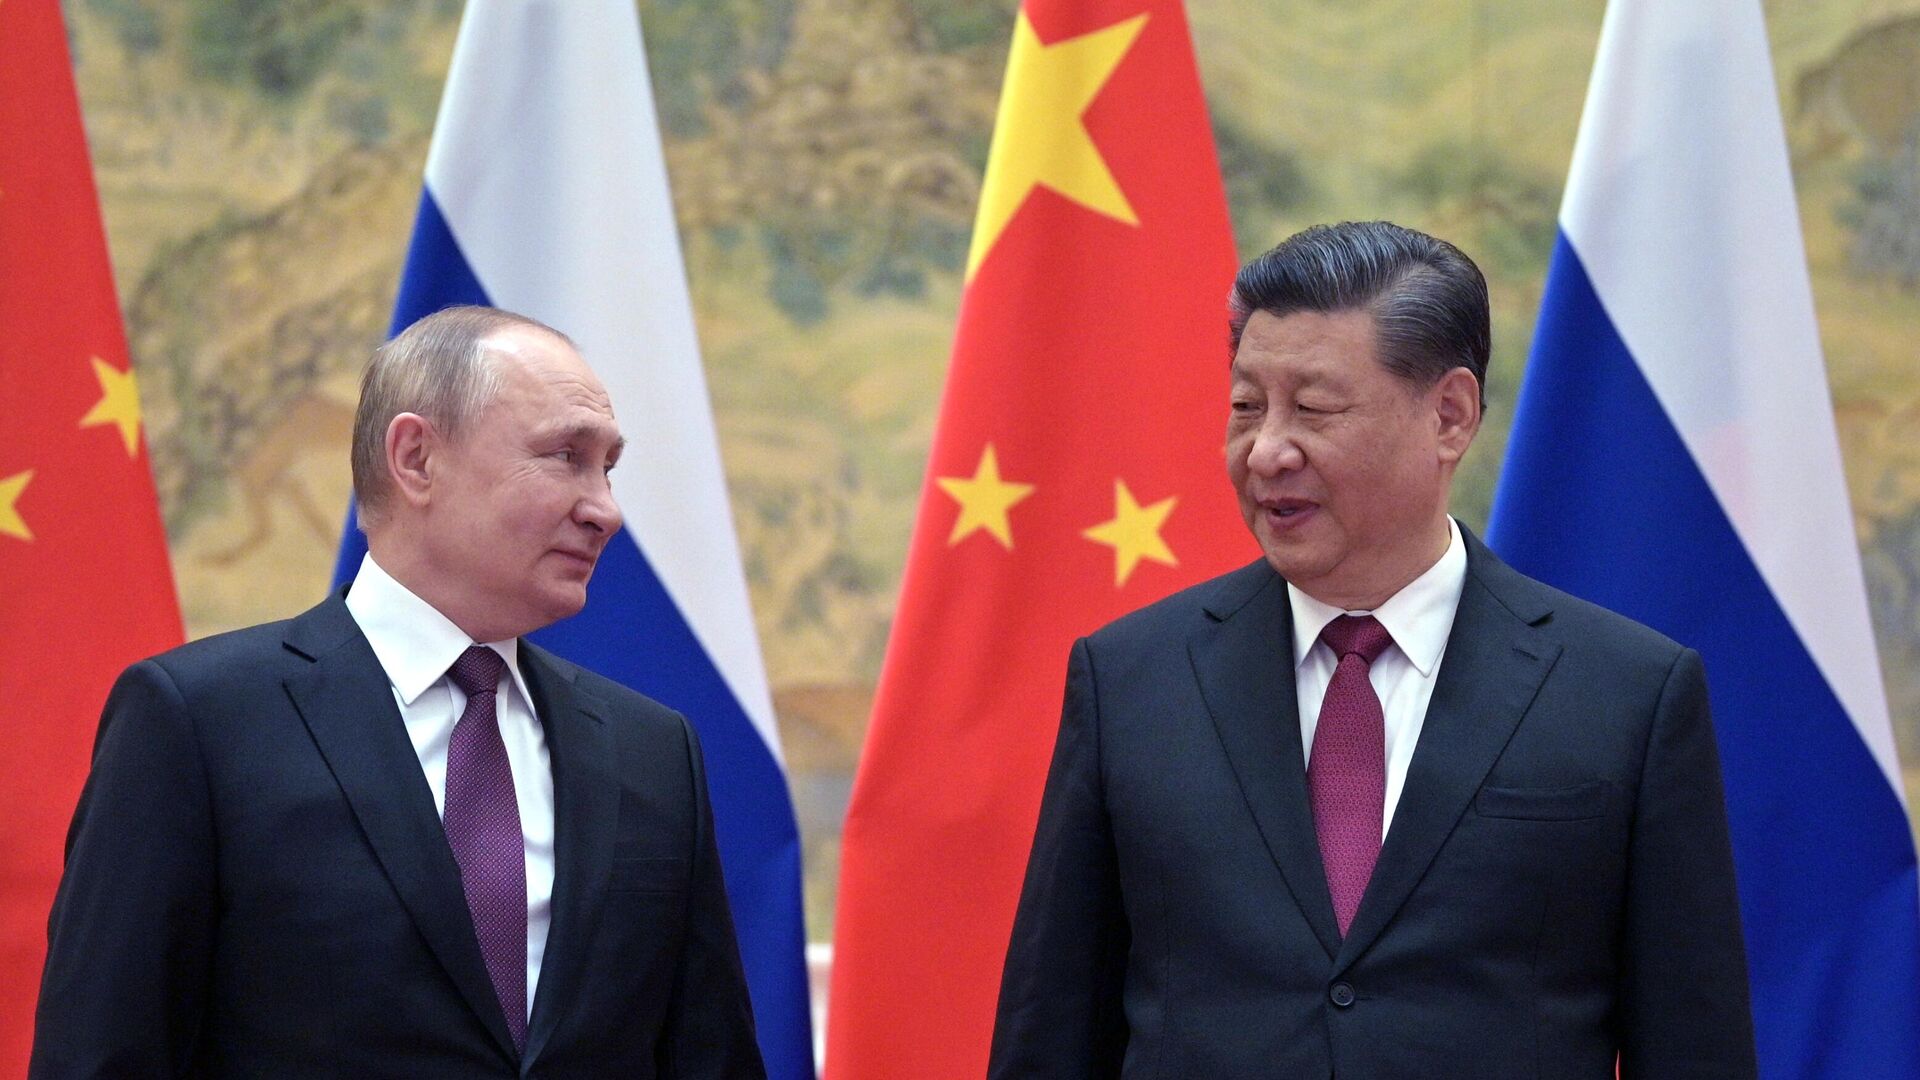 Russian President Vladimir Putin, left, and Chinese President Xi Jinping pose during their meeting at the Diaoyutai State Guesthouse in Beijing, China. - Sputnik International, 1920, 15.06.2022